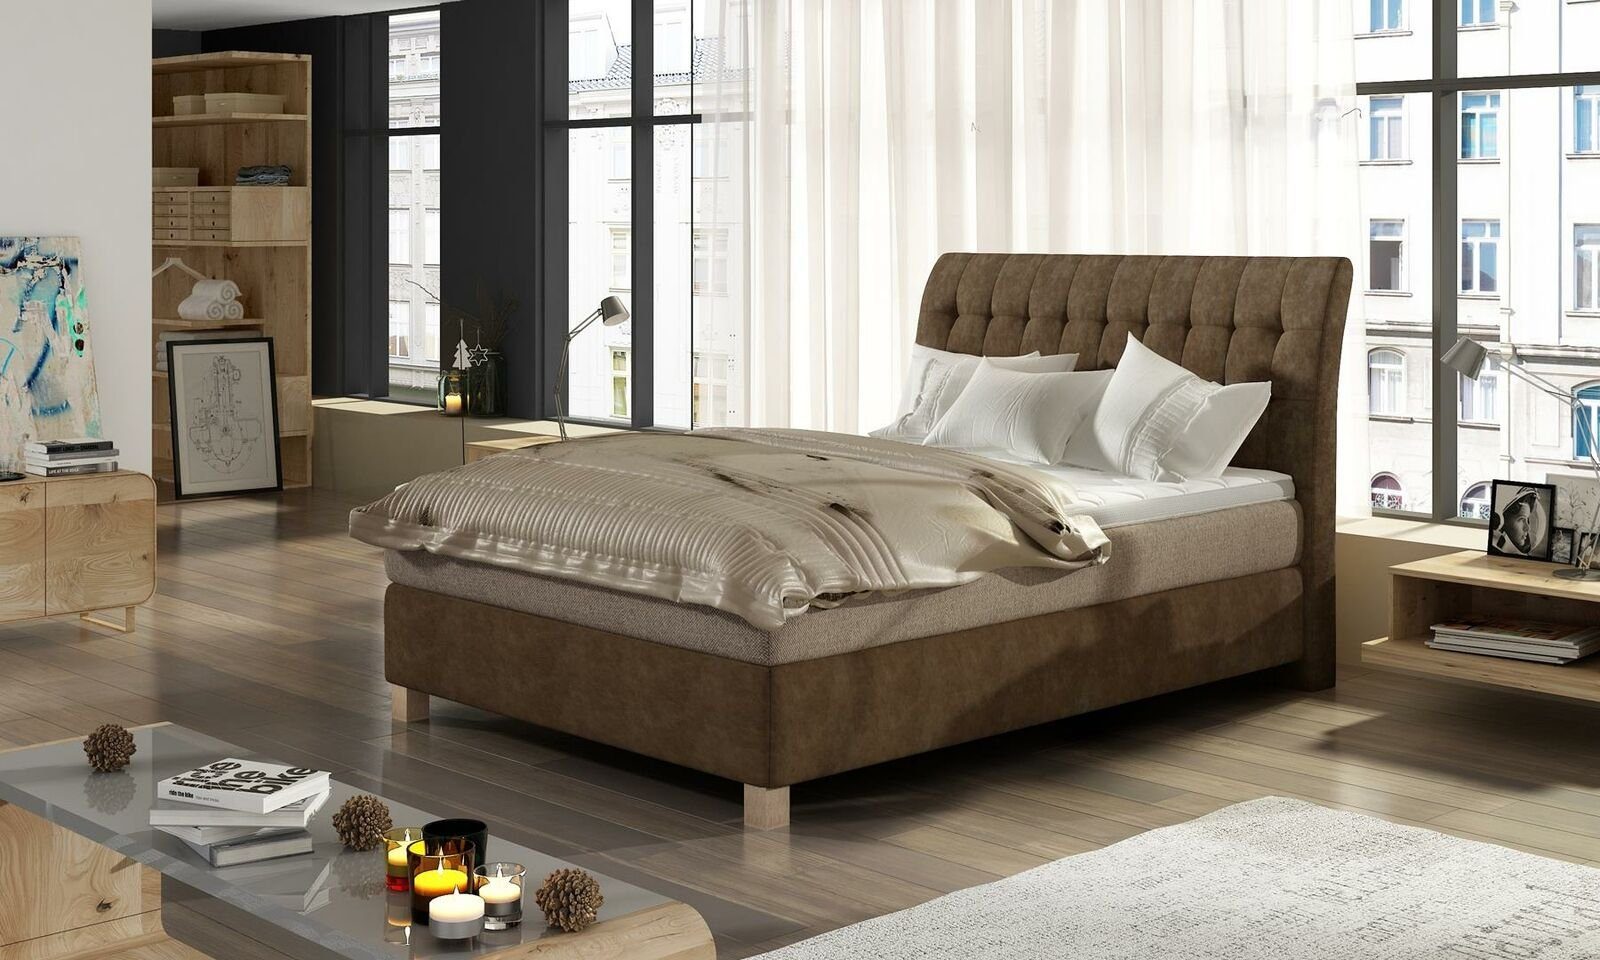 Doppel Design Bett, Bett Möbel Einrichtung Braun 140x200cm Schlafzimmer JVmoebel Betten